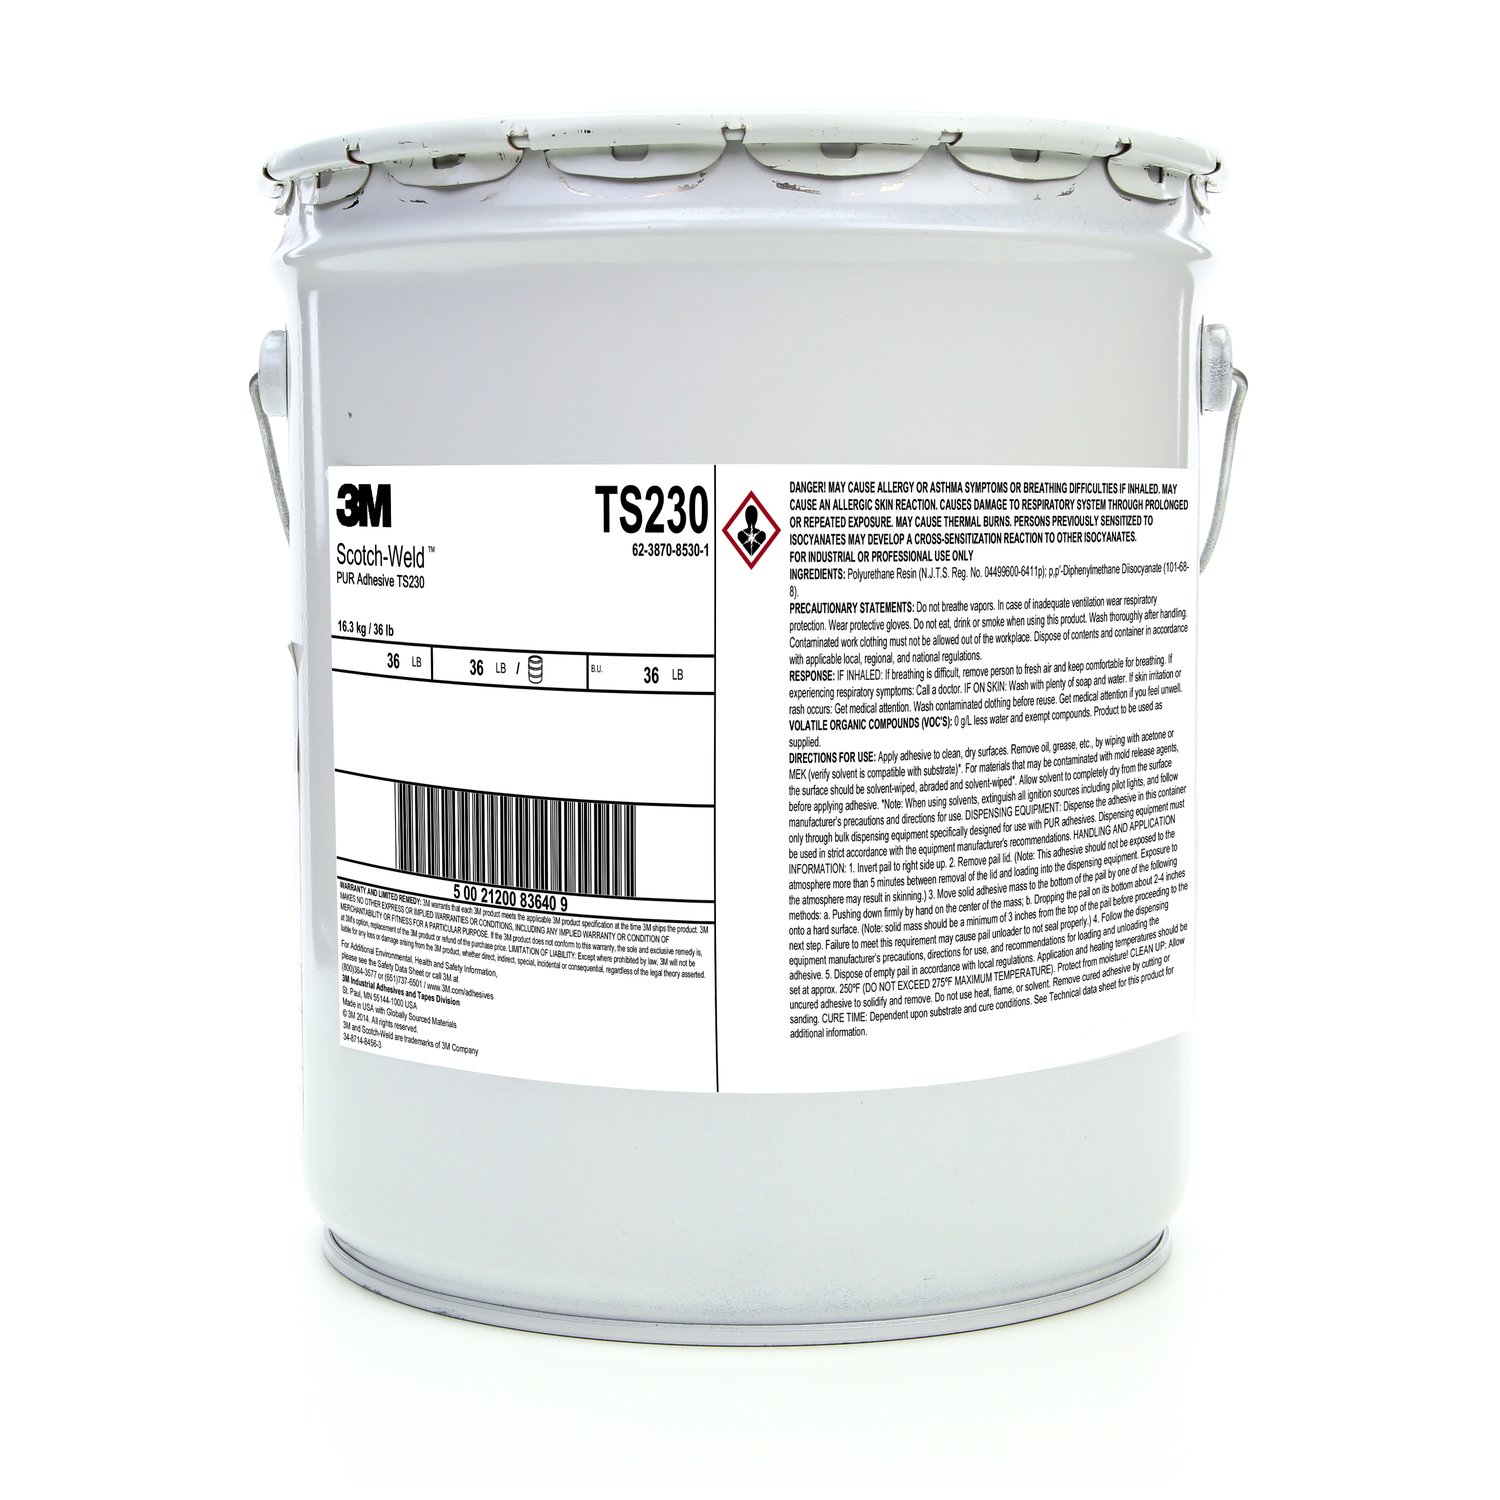 7100024959 - 3M Scotch-Weld PUR Adhesive TS230, Off-White, 5 Gallon (36 lb), Drum